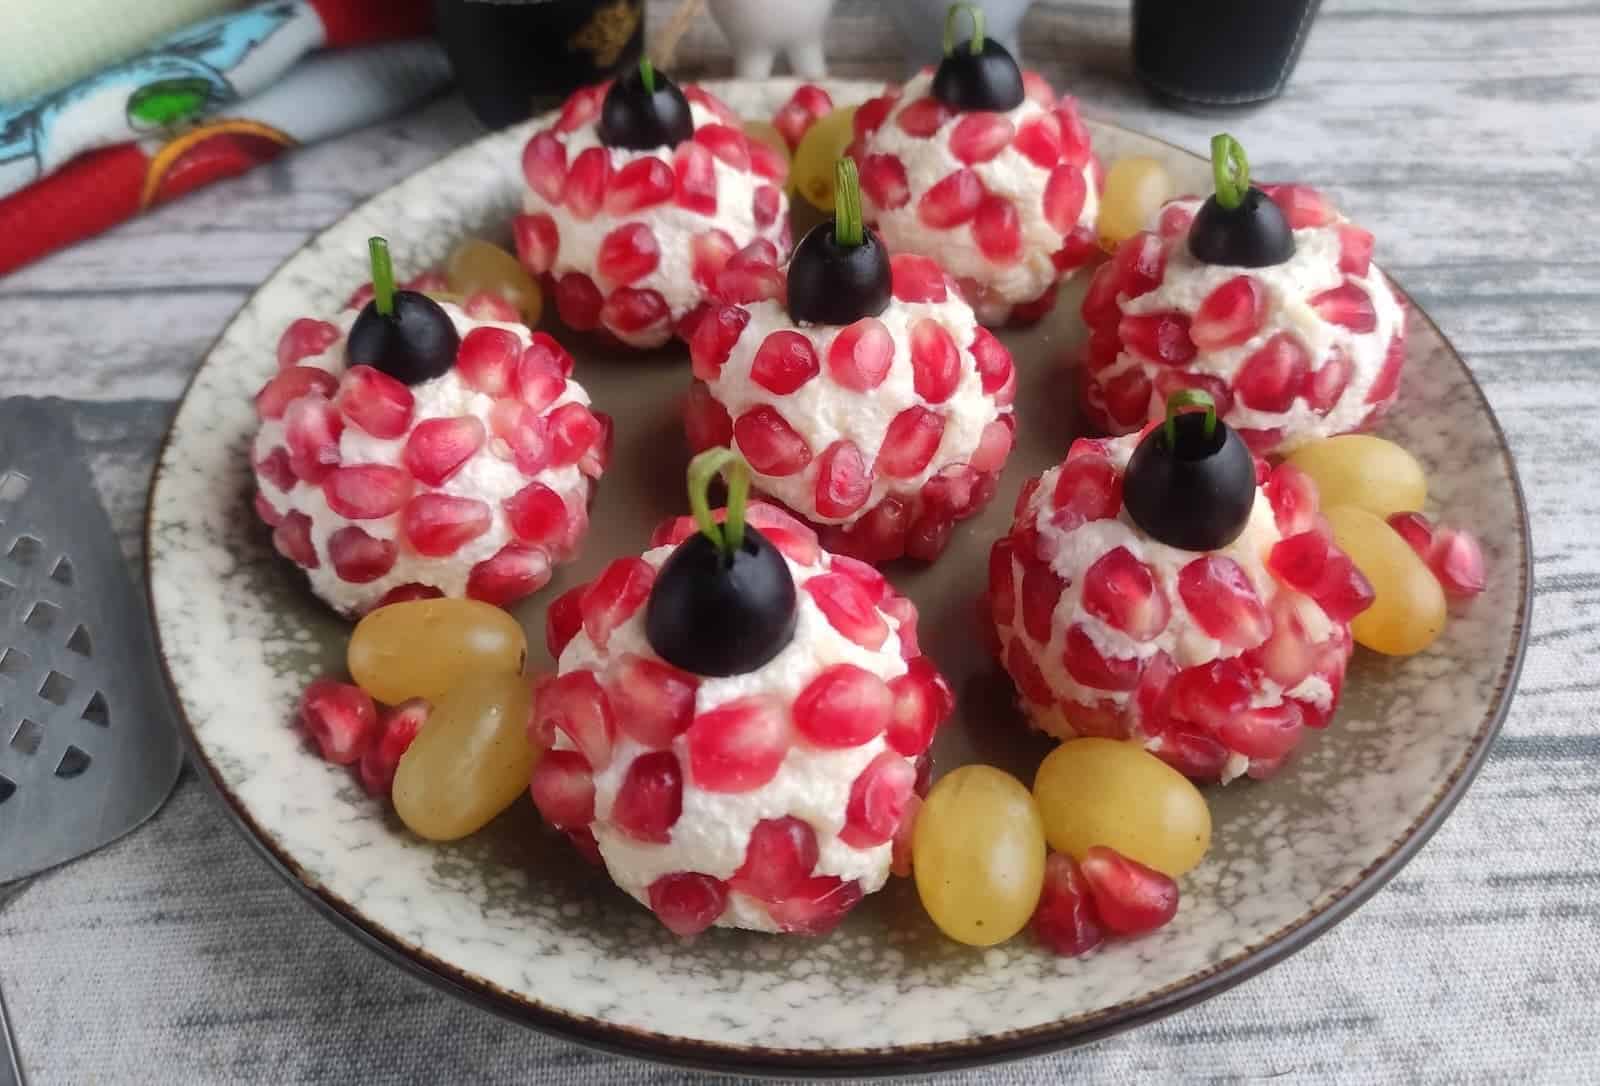 Pomegranate balls on a plate.